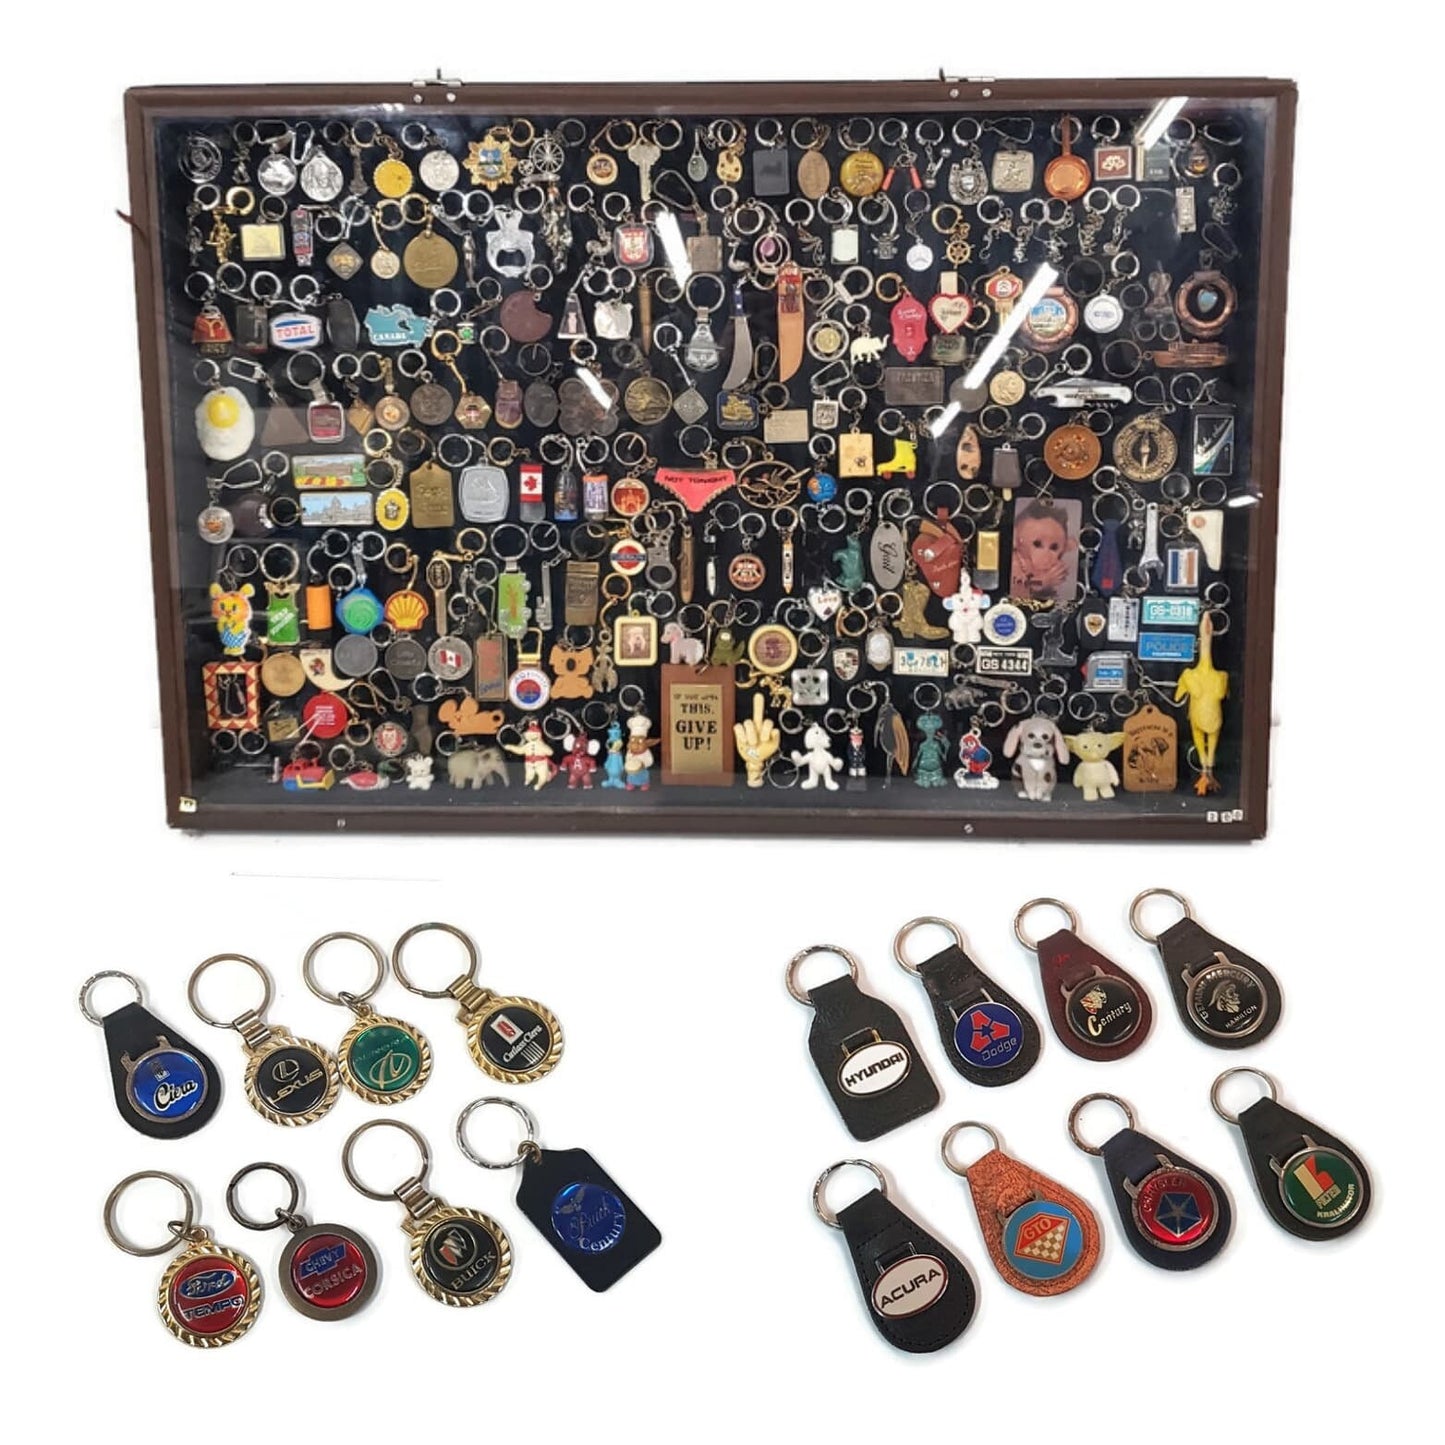 ford key chain keychain key fob keytag vintage automotove keychain gift collectible